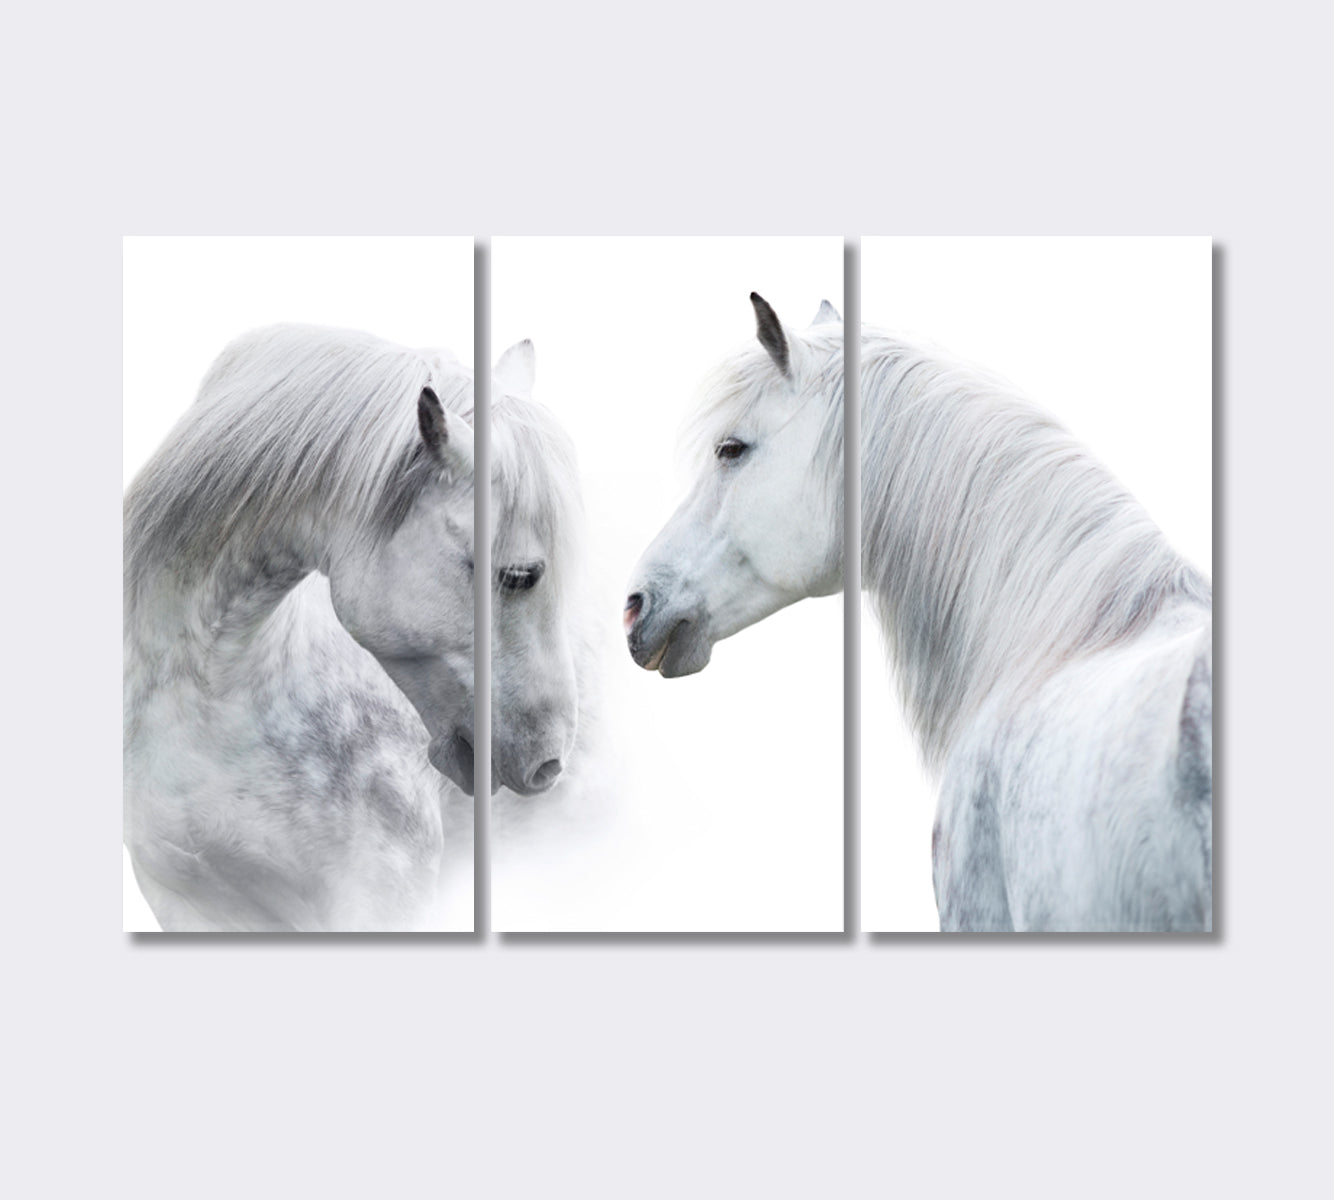 White Horses Portrait Giclee Print-Canvas Print-CetArt-3 Panels-36x24 inches-CetArt